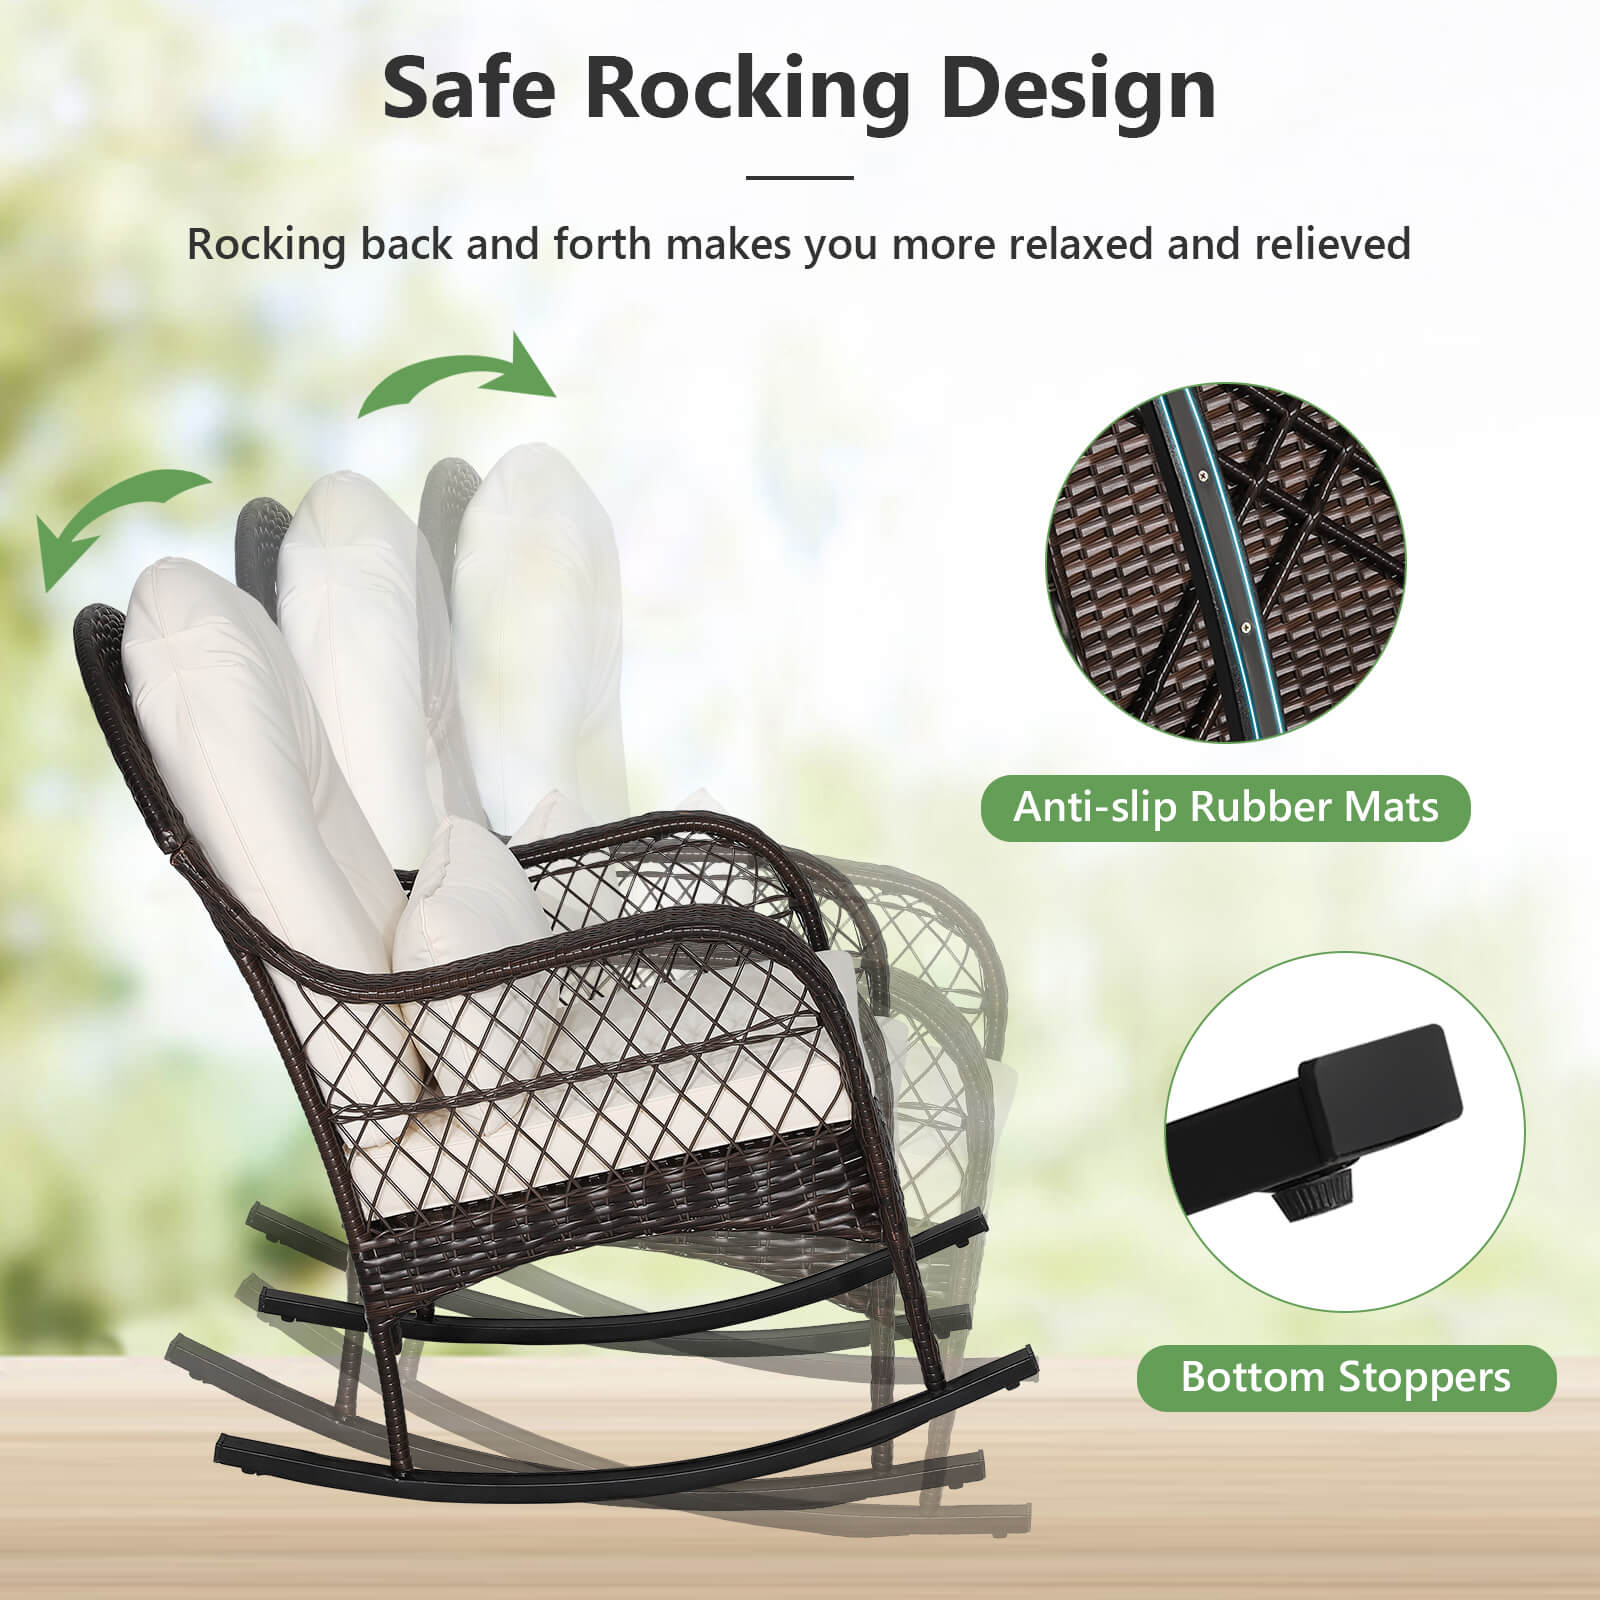 Patio_Rocking_Chair_with_Safe_Rocking_Design-3-1.jpg